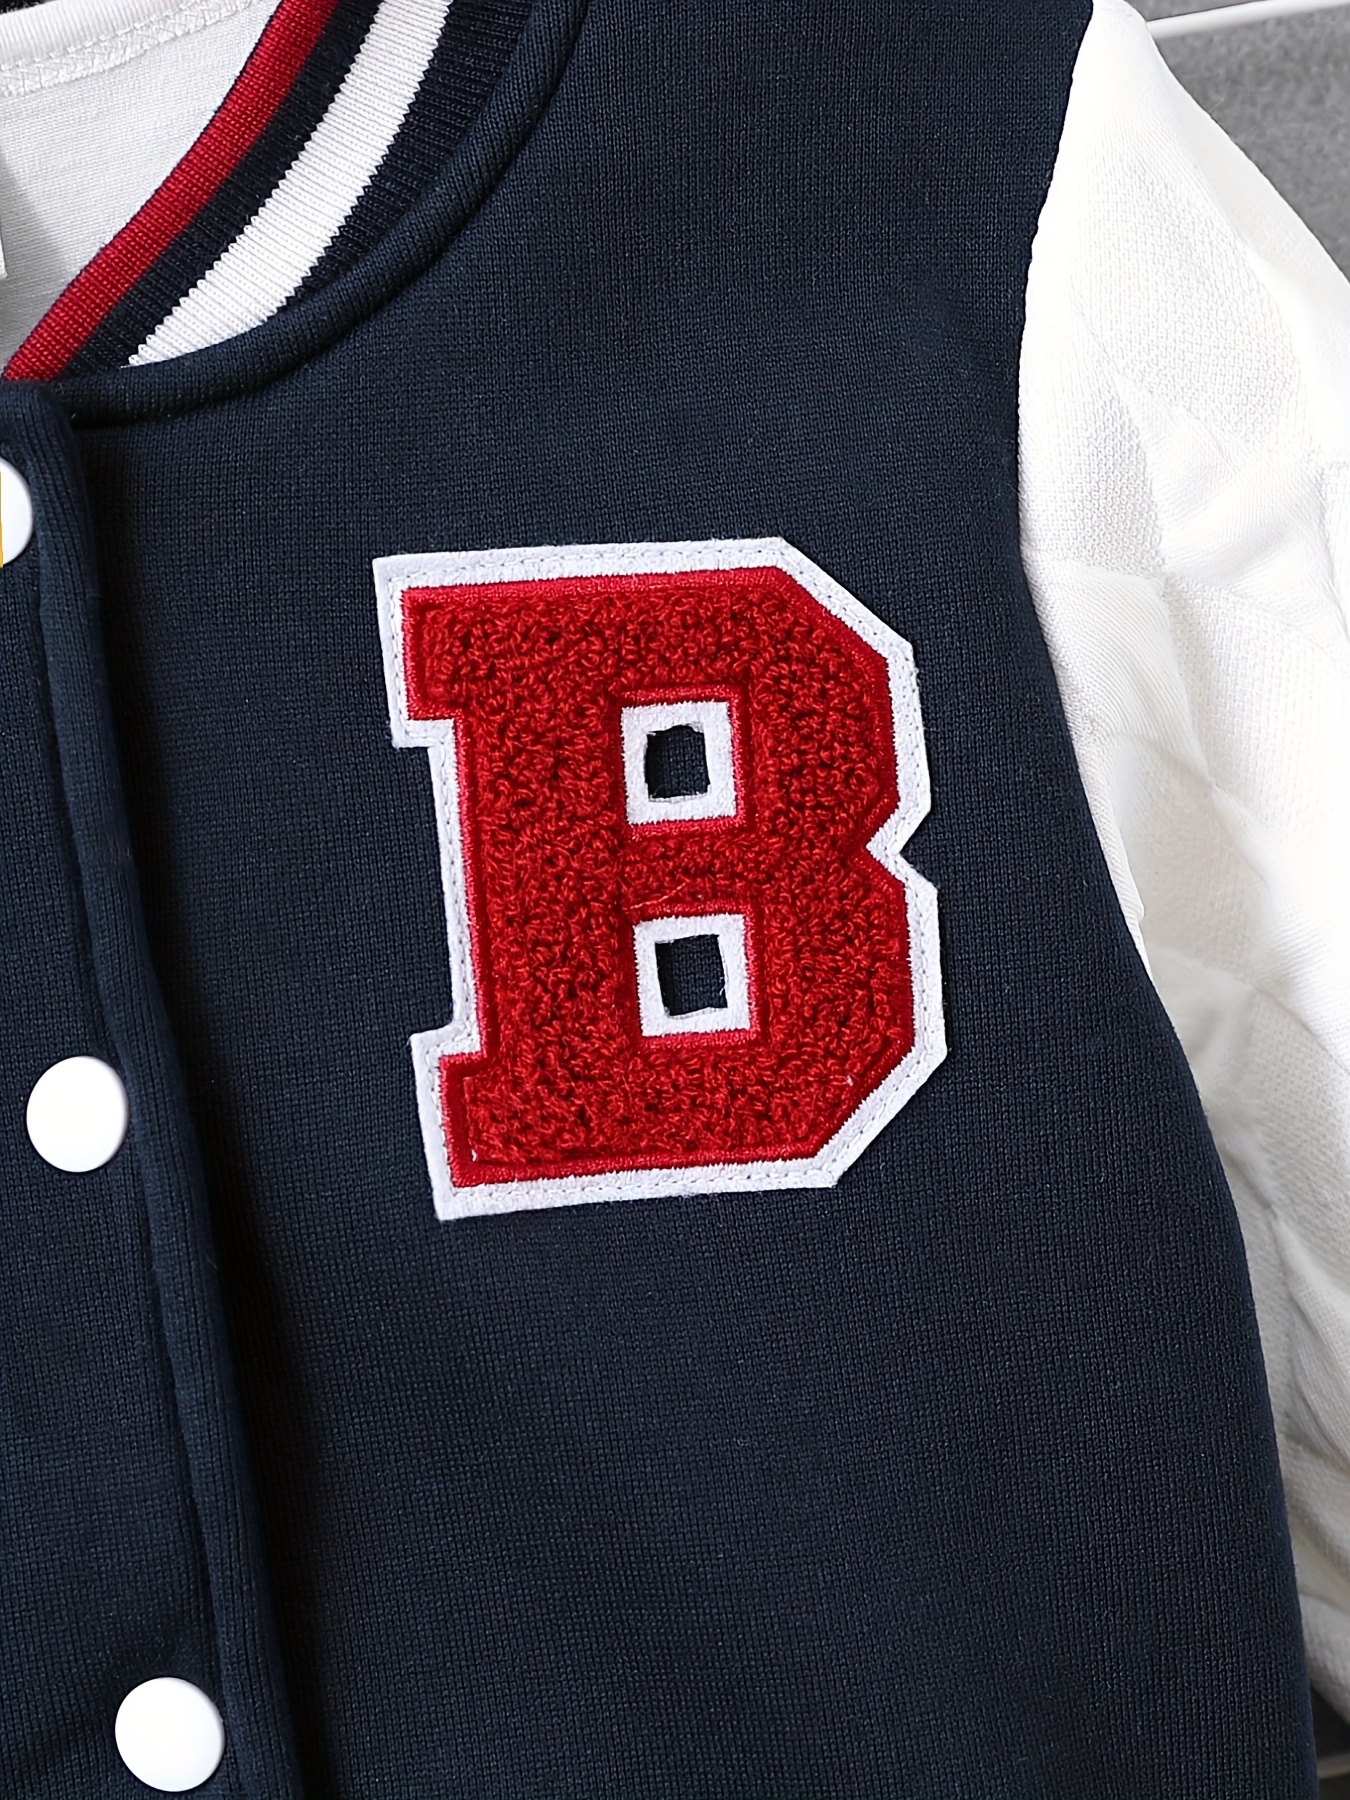 Genuine Merchandise Boston Red Sox MLB Sewn Sleeveless Baseball Jersey  Youth S 8